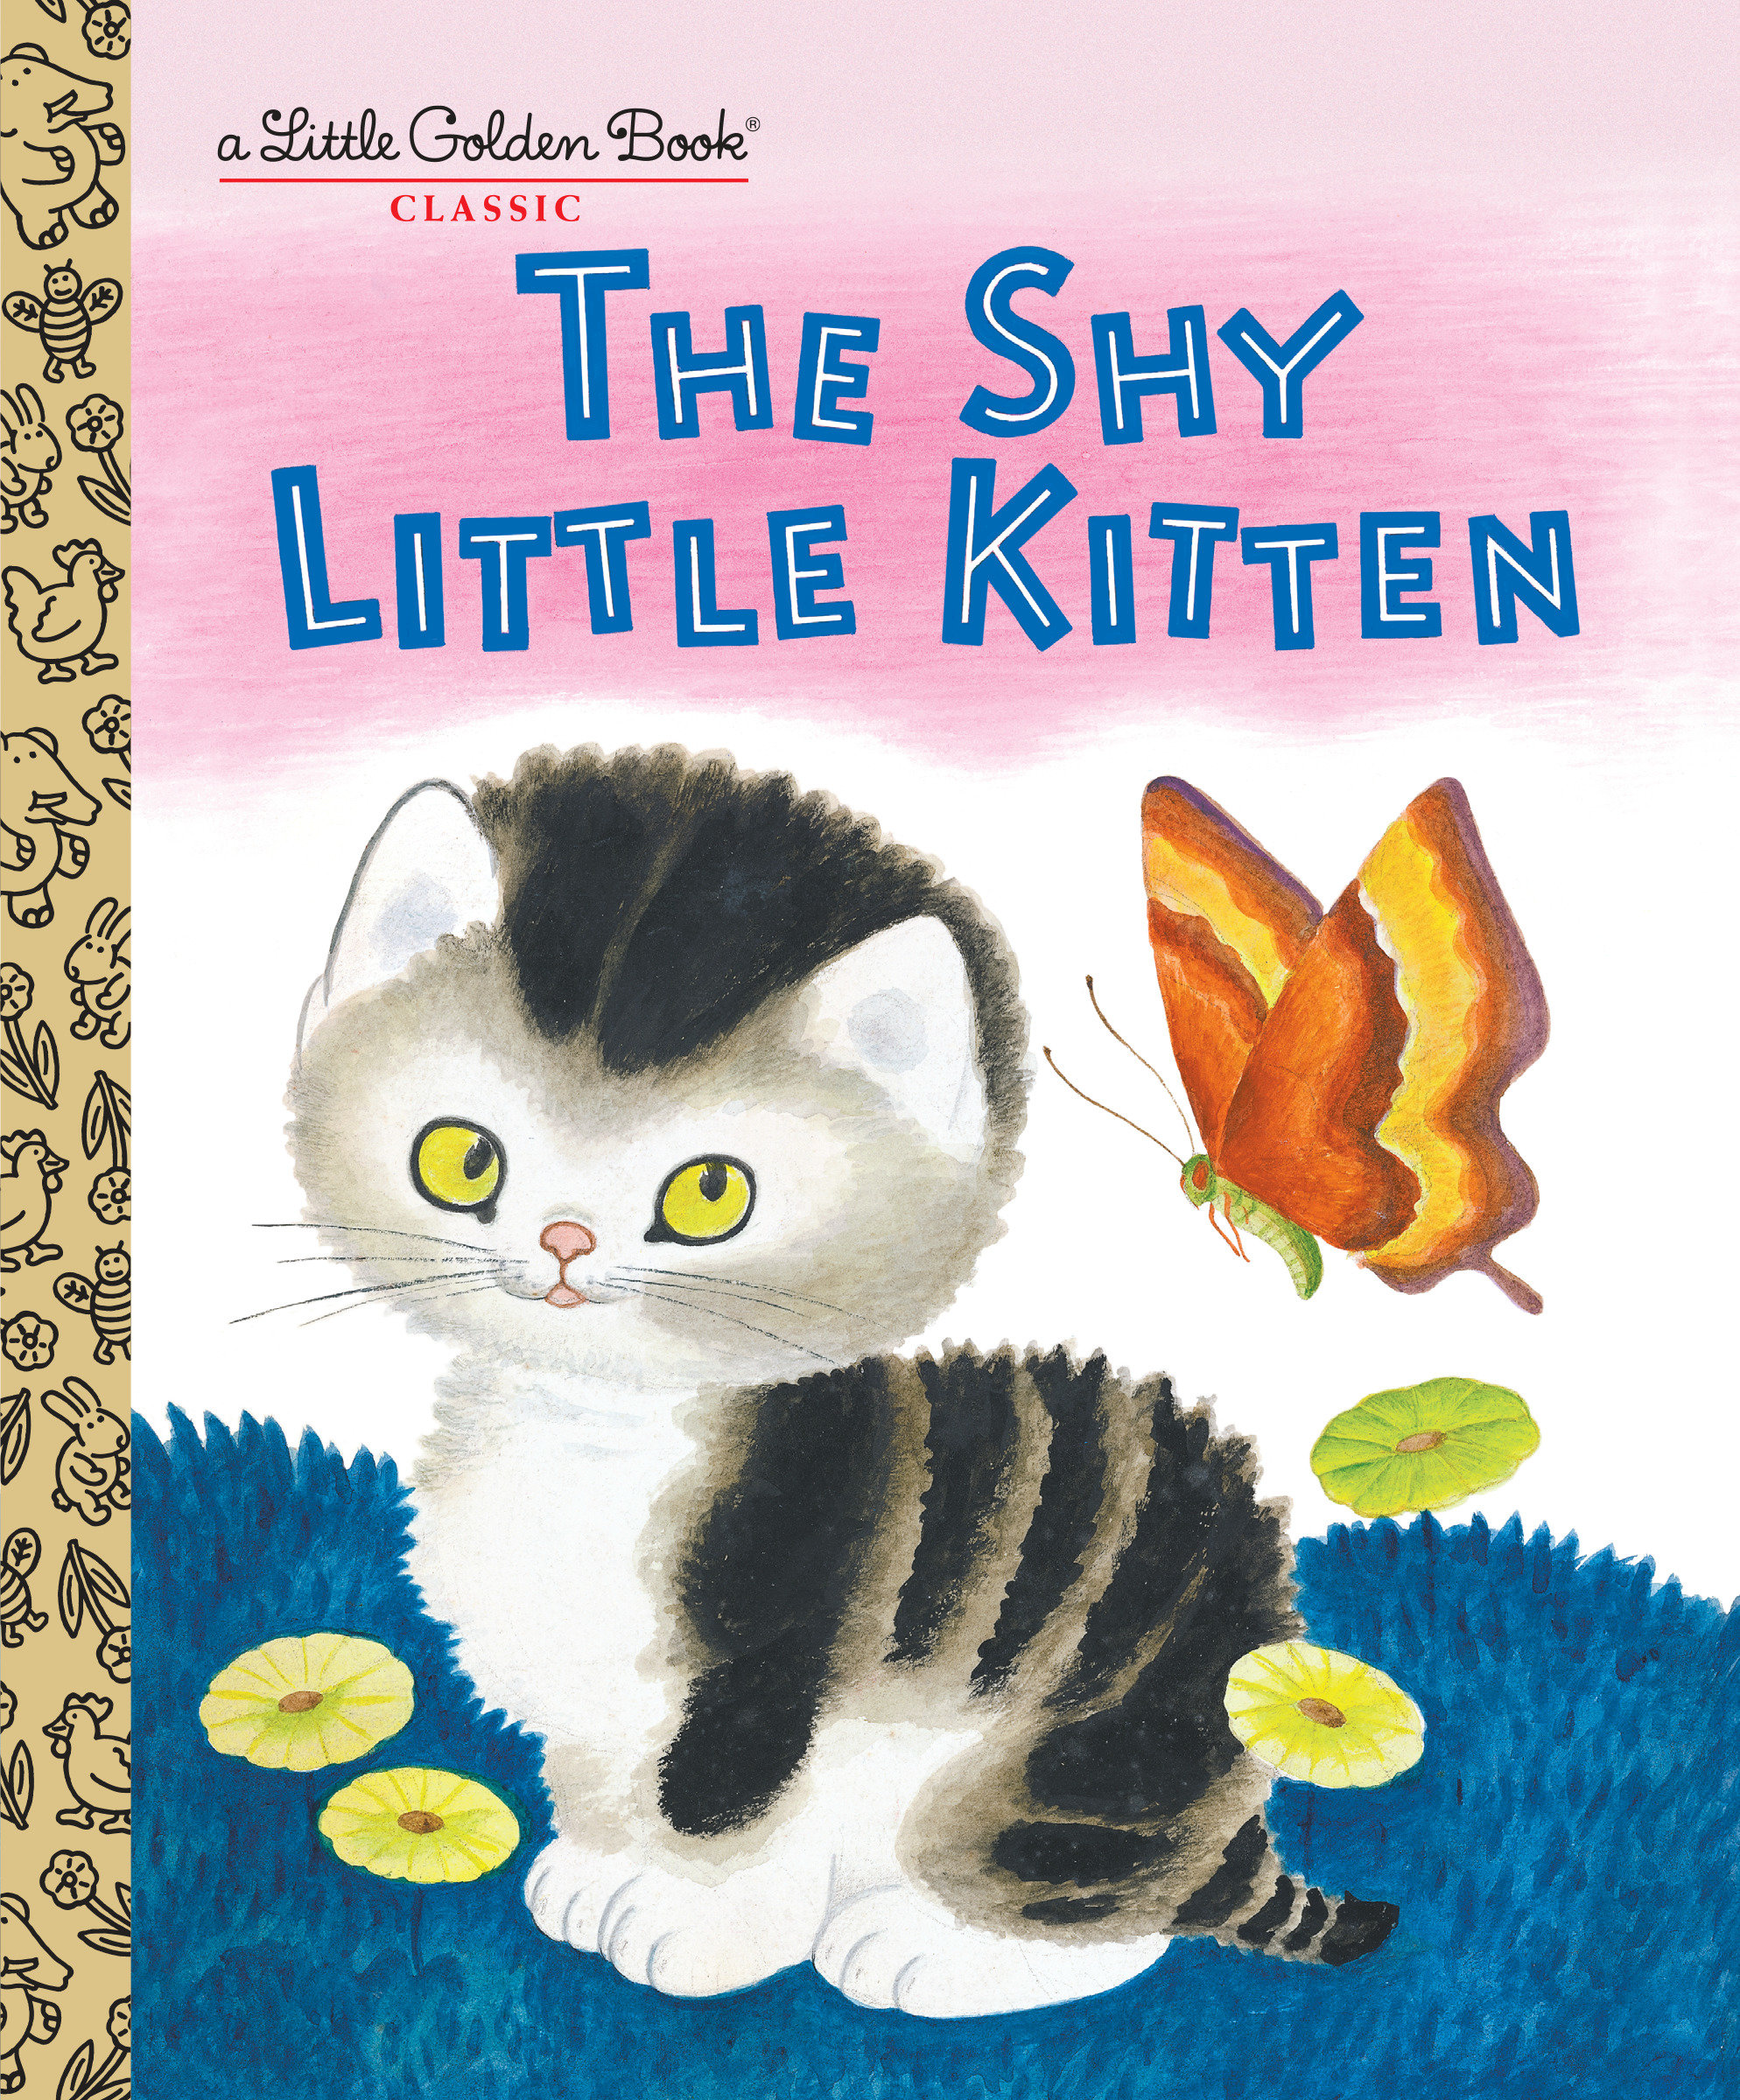 The shy little kitten cover image